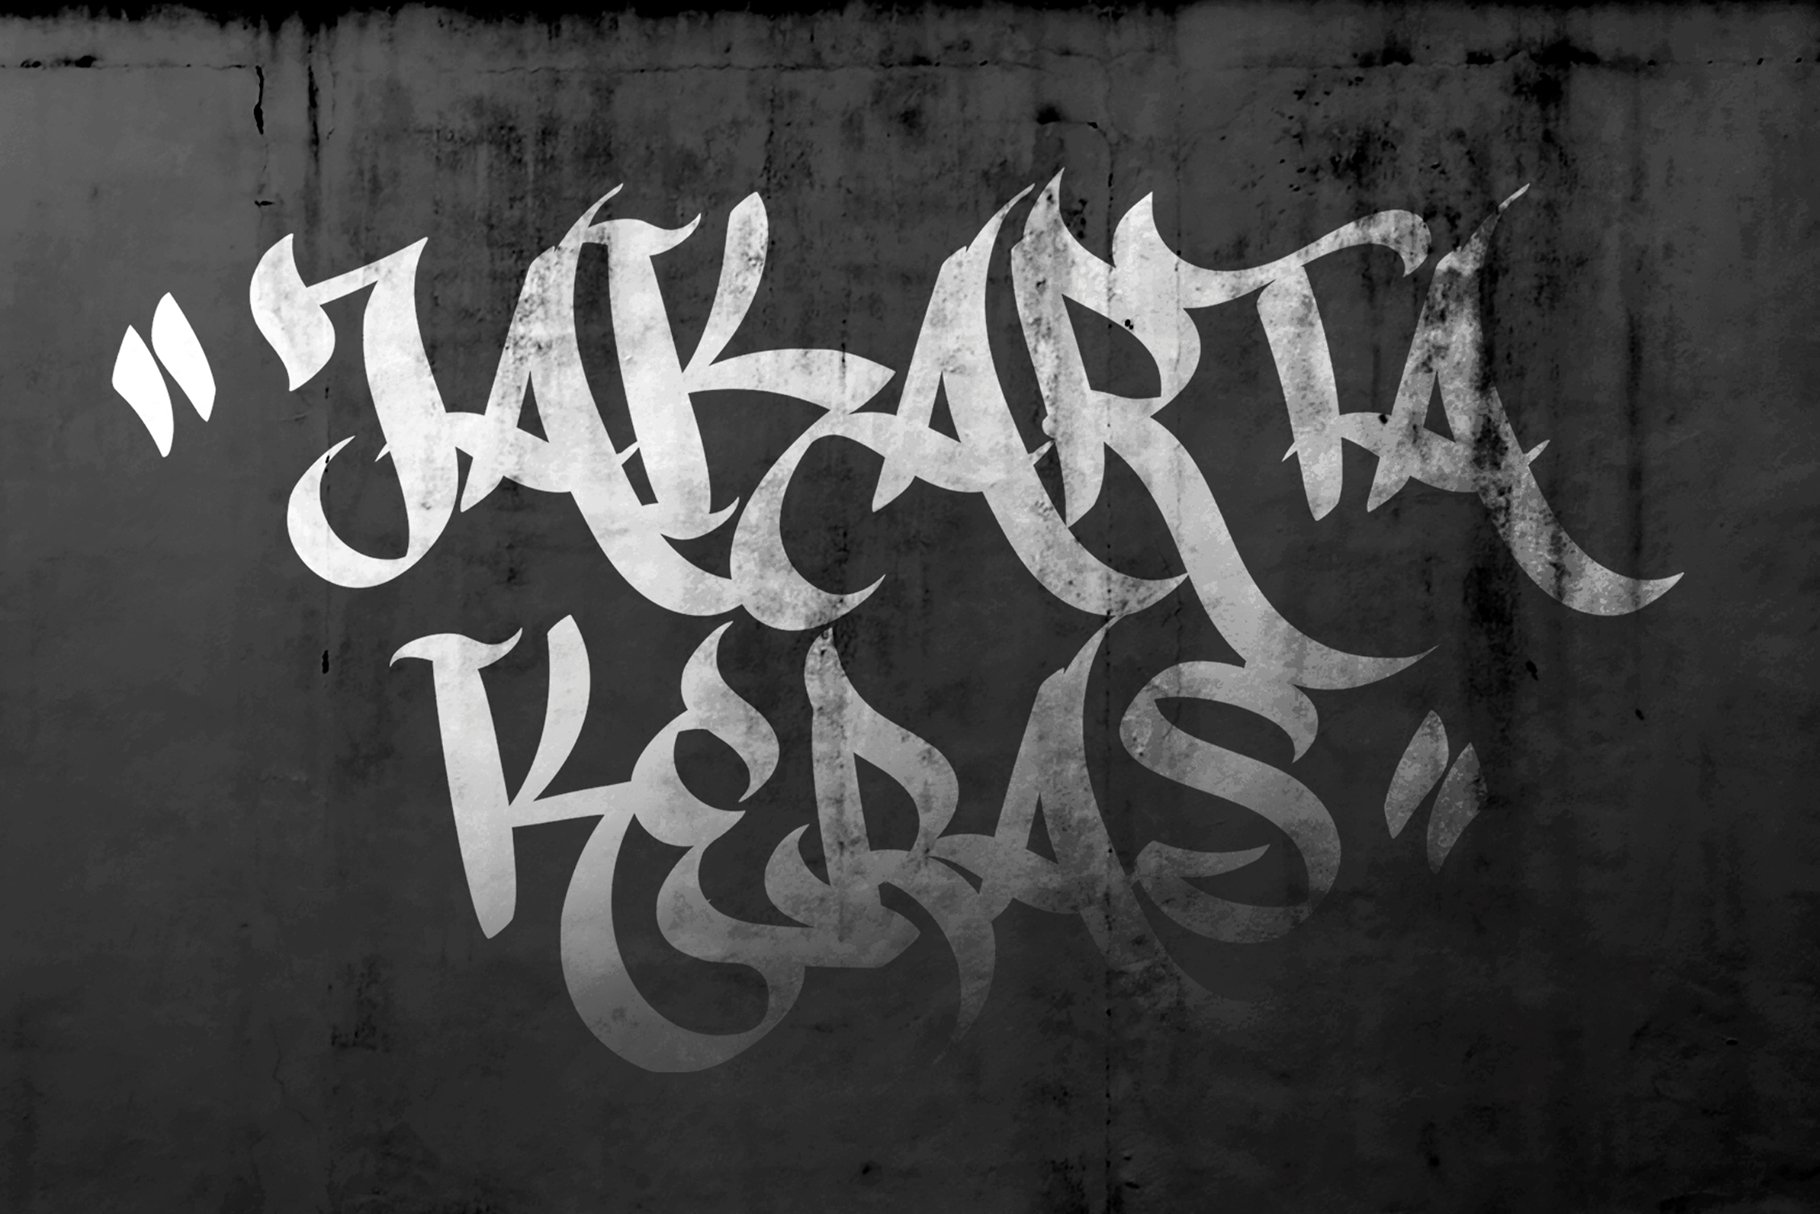 Greatboyz - Realistic Graffiti Tag preview image.